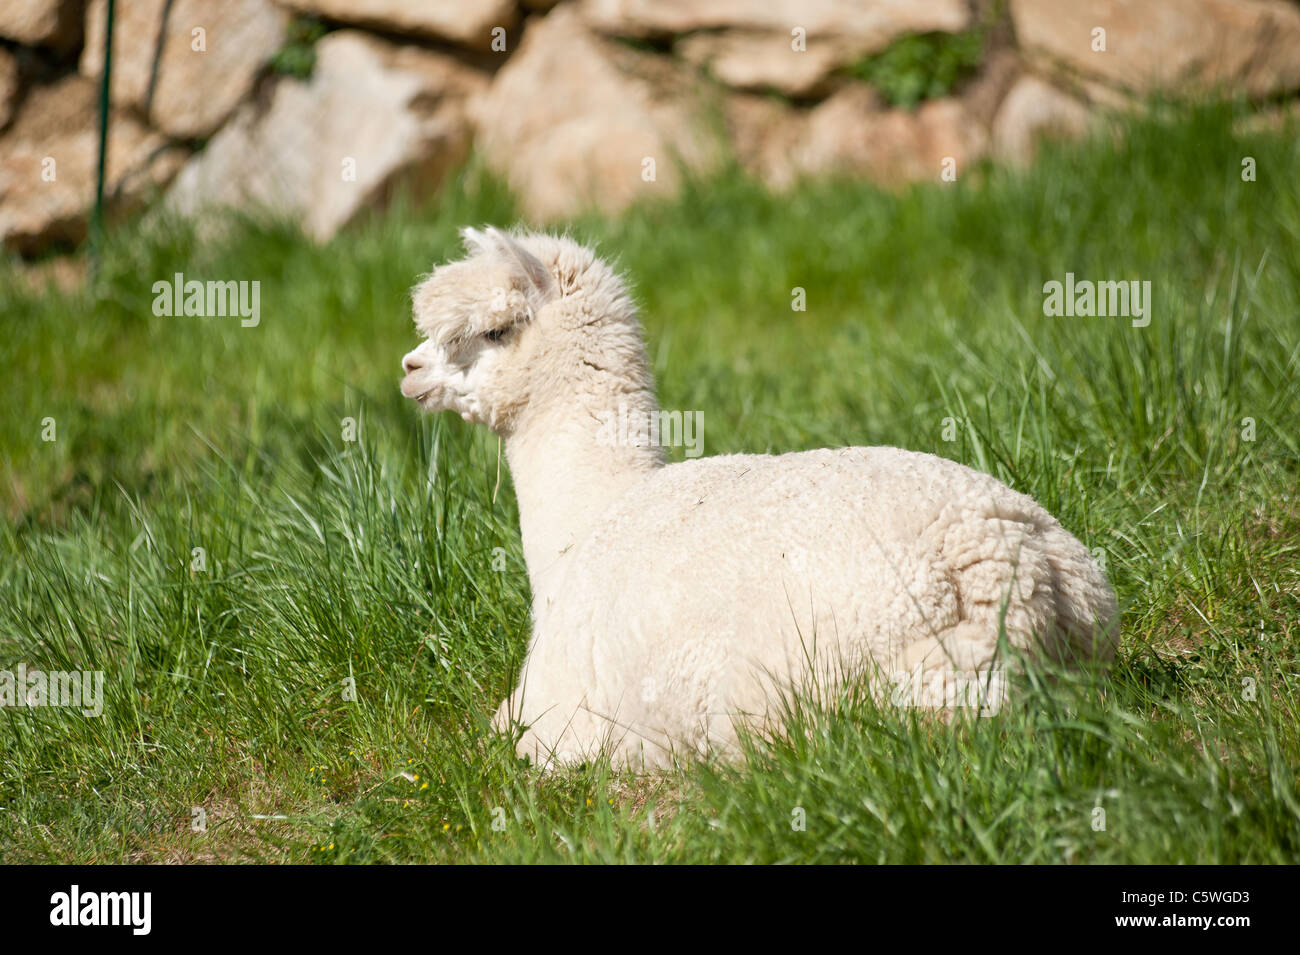 White fluffy Alpaka lying in the Grass Stock Photo